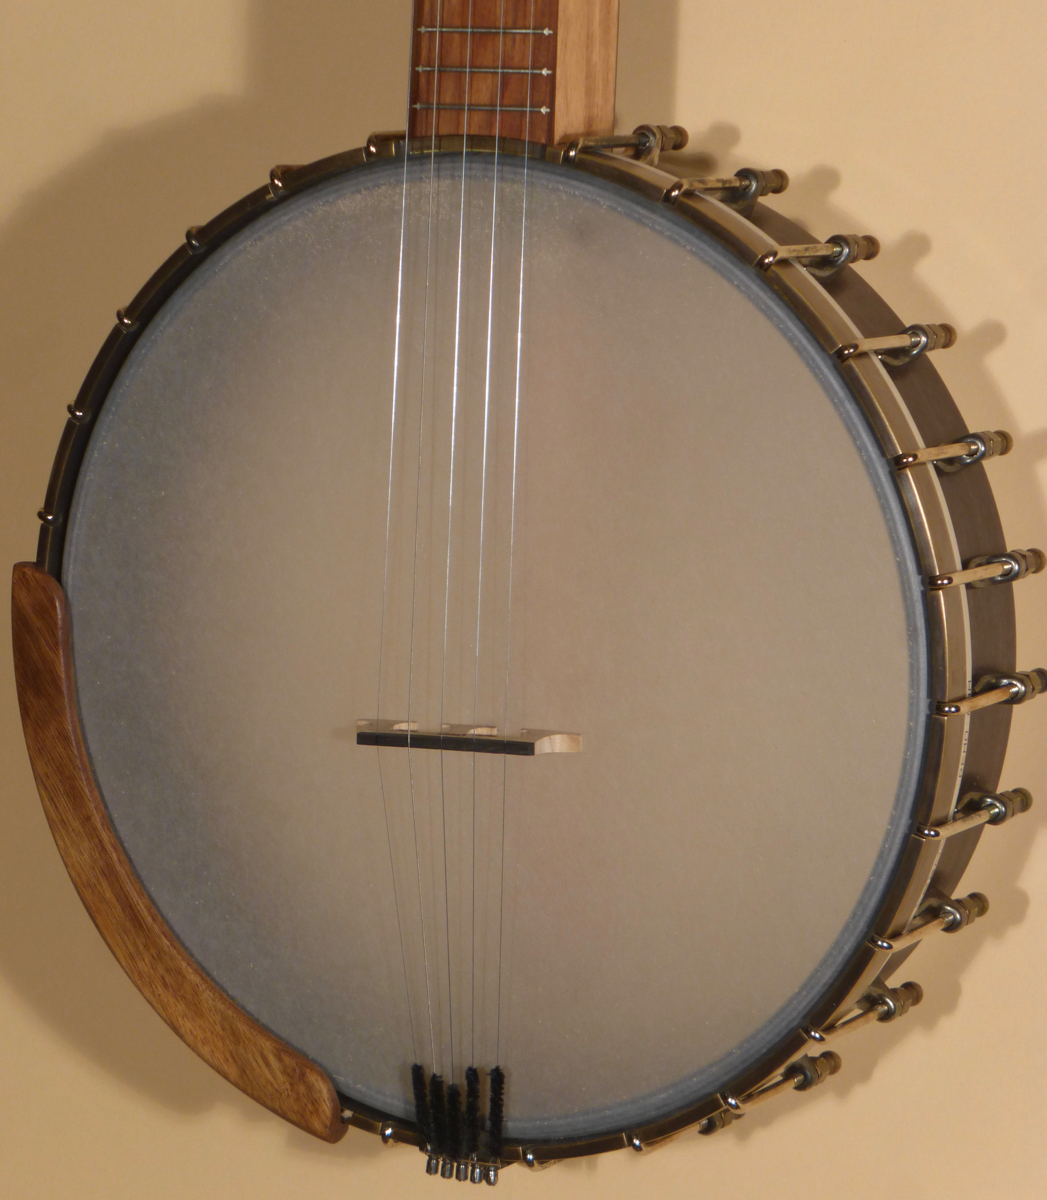 New ODE “UTE” Open-Back Banjo Product